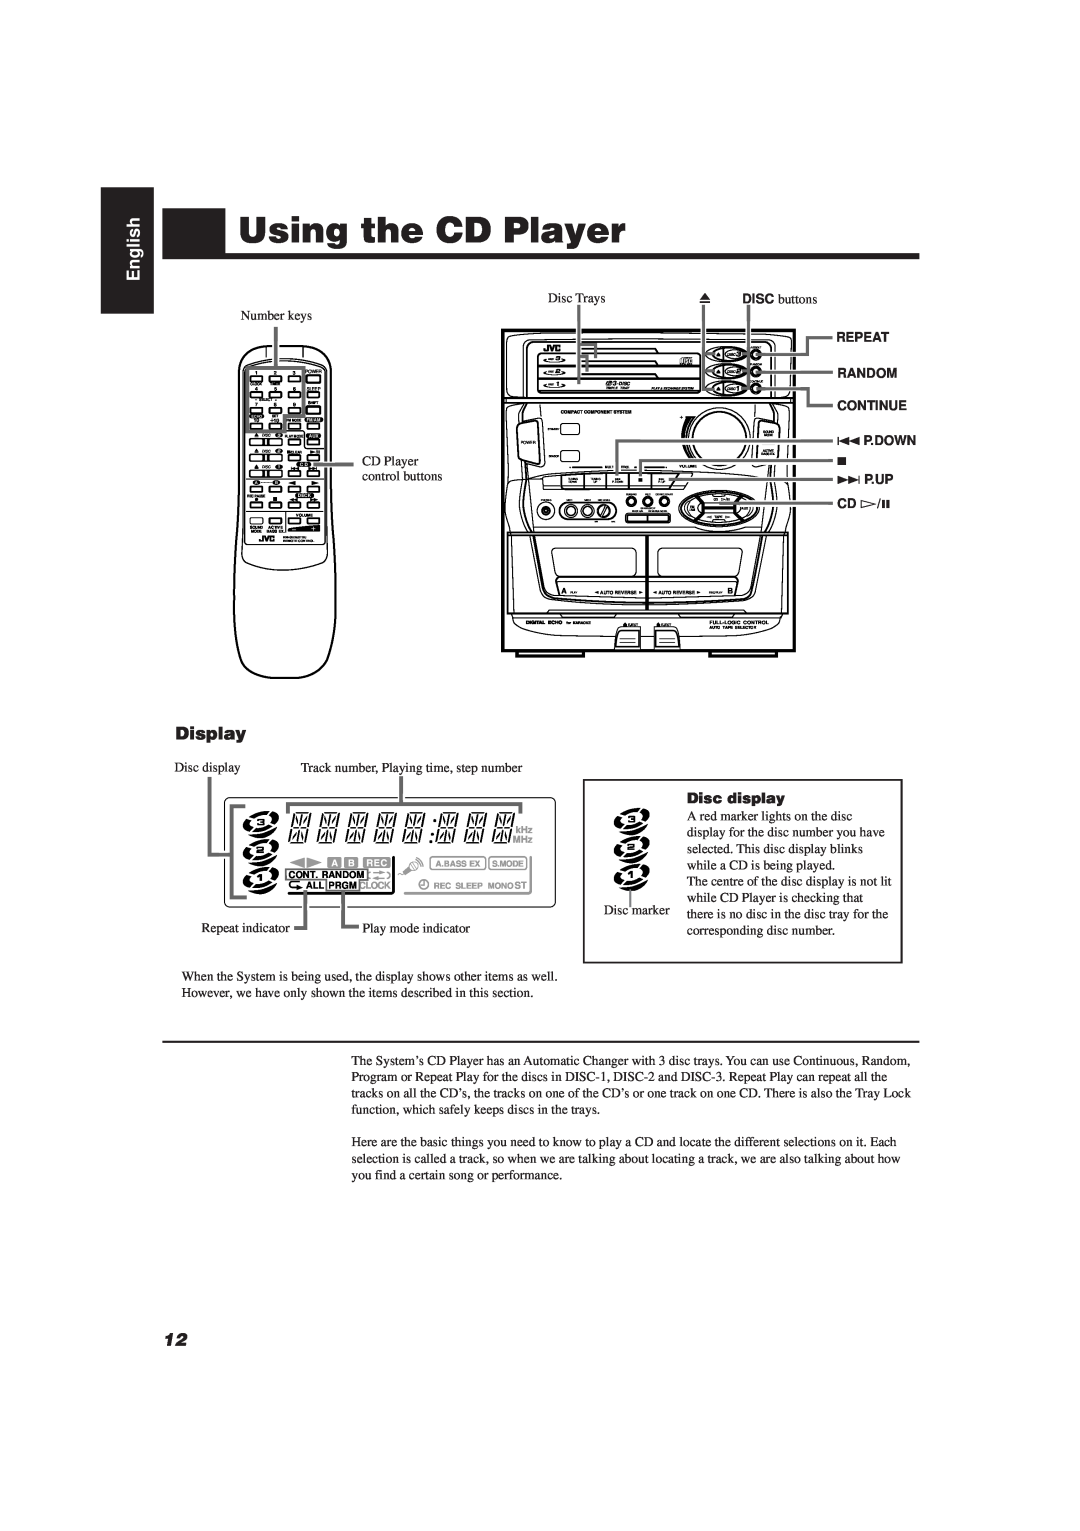 JVC MX-D301T, MX-D401T manual Using the CD Player, English, Repeat, Random, Continue, 4P.DOWN, ¢ P.Up, CD Ü/8, Disc display 